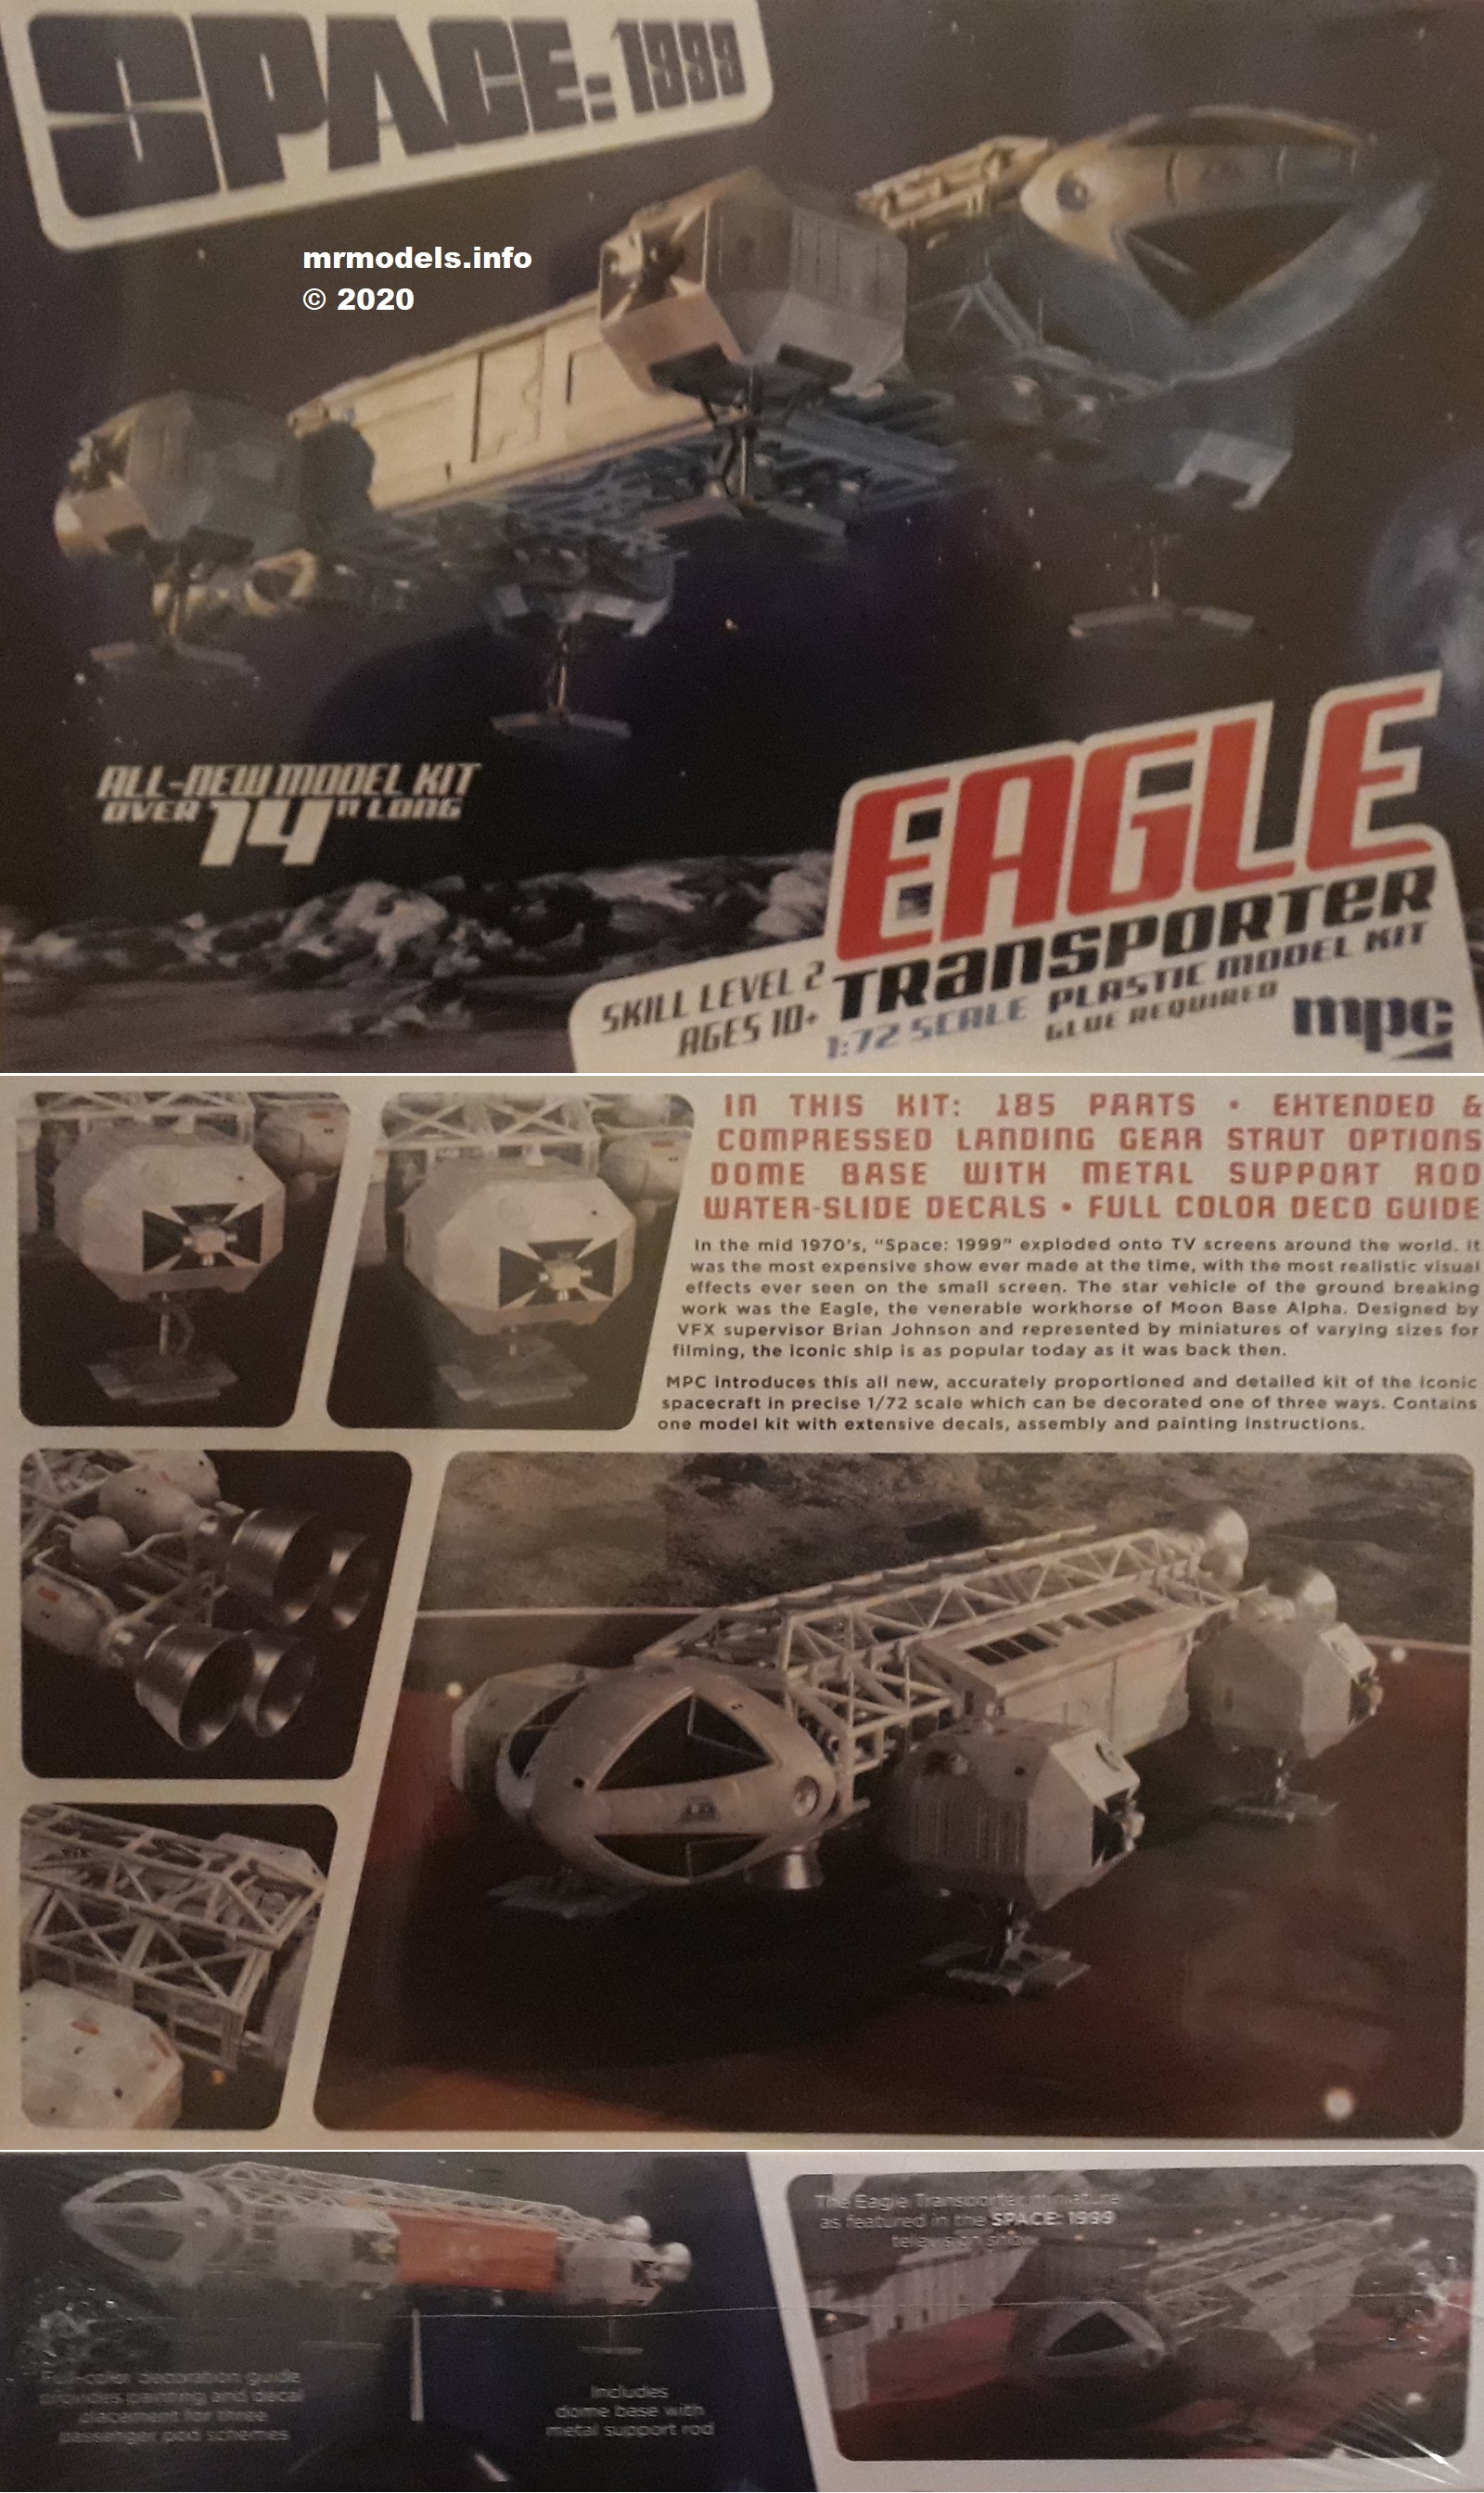 Space 1999 1/72 14" Eagle Transporter